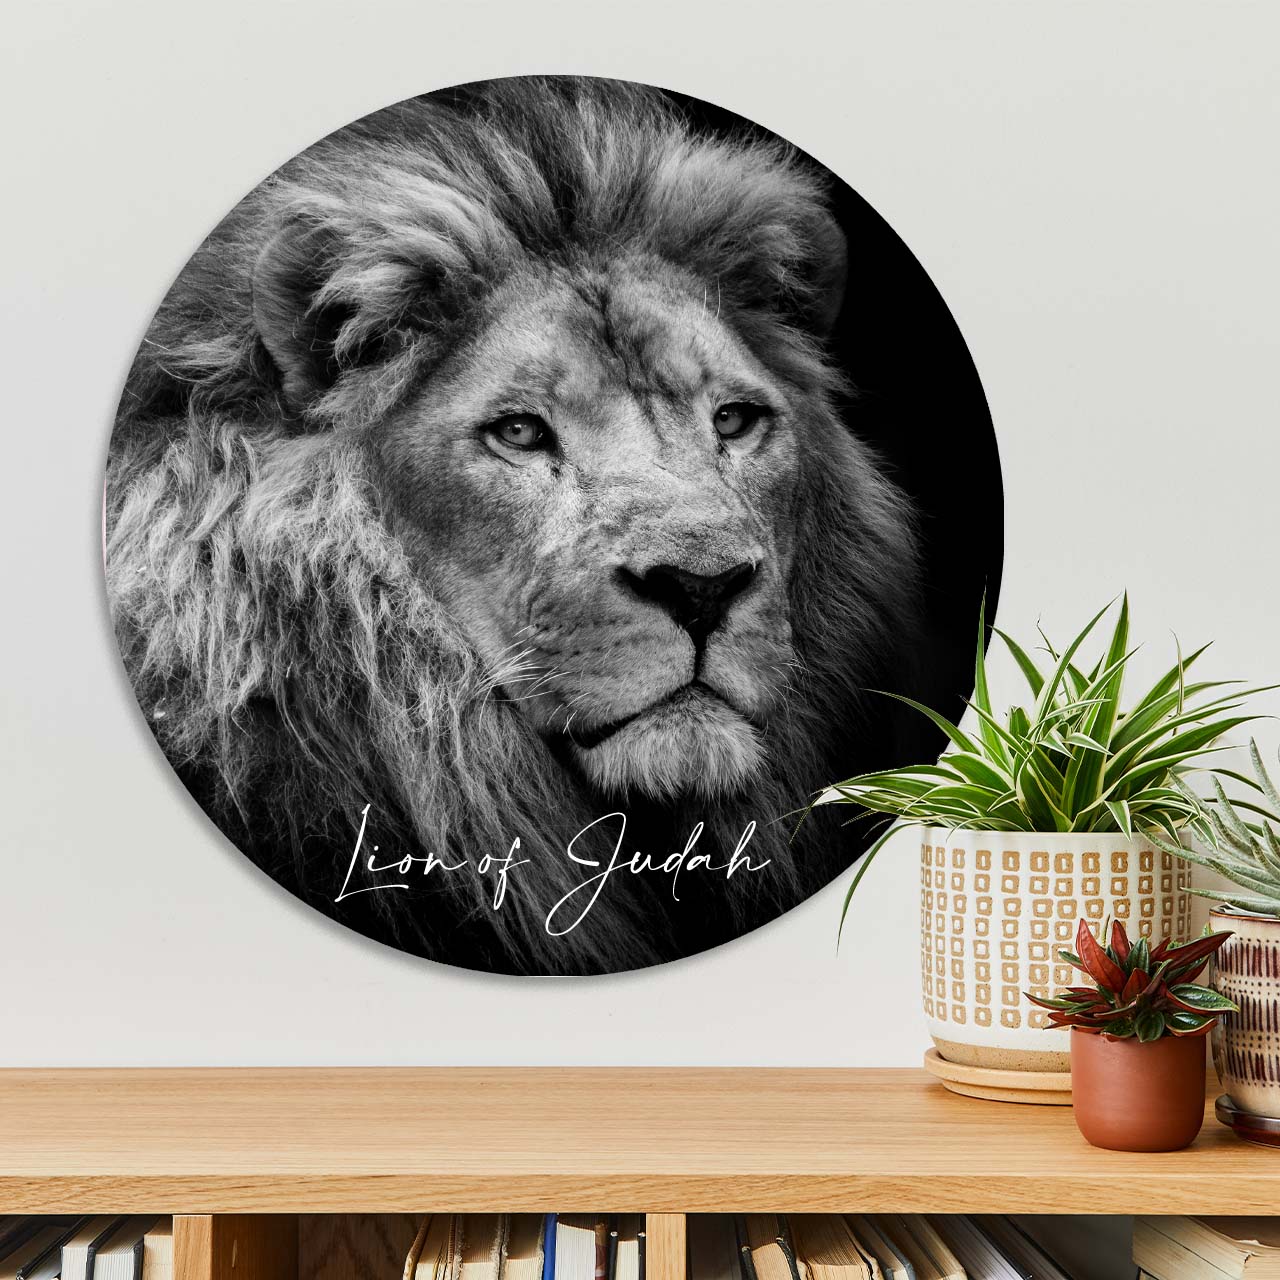 Muurcirkel 'Lion of Judah' - 30 cm